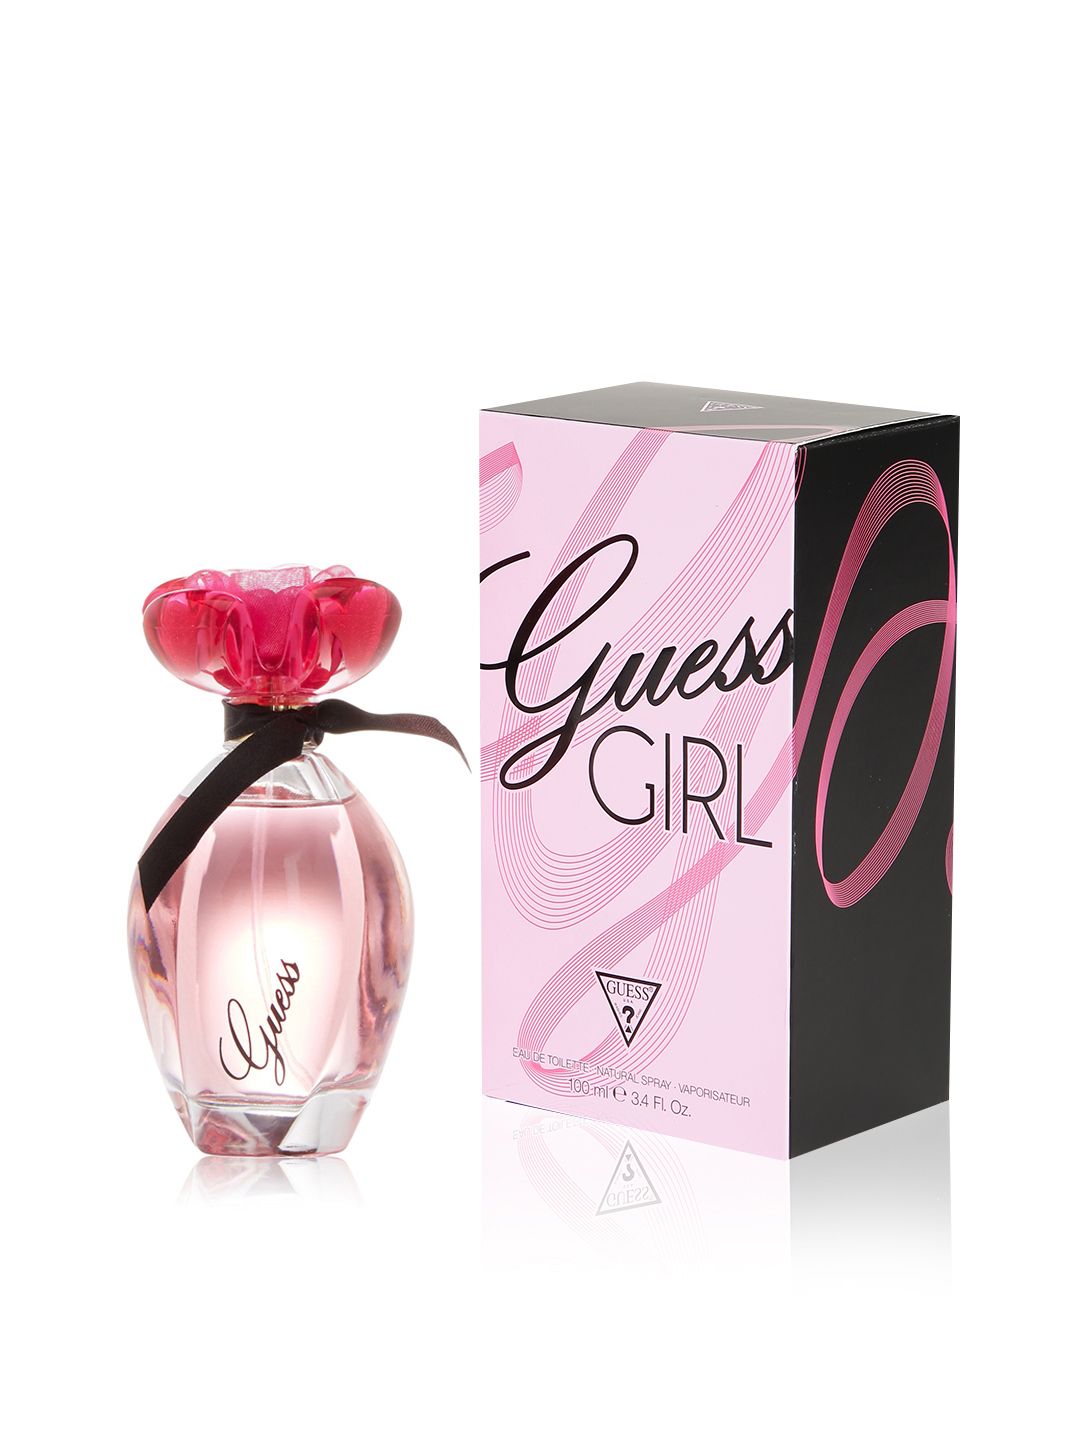 GUESS Girl Eau De Toilette Perfume 100 ml Price in India